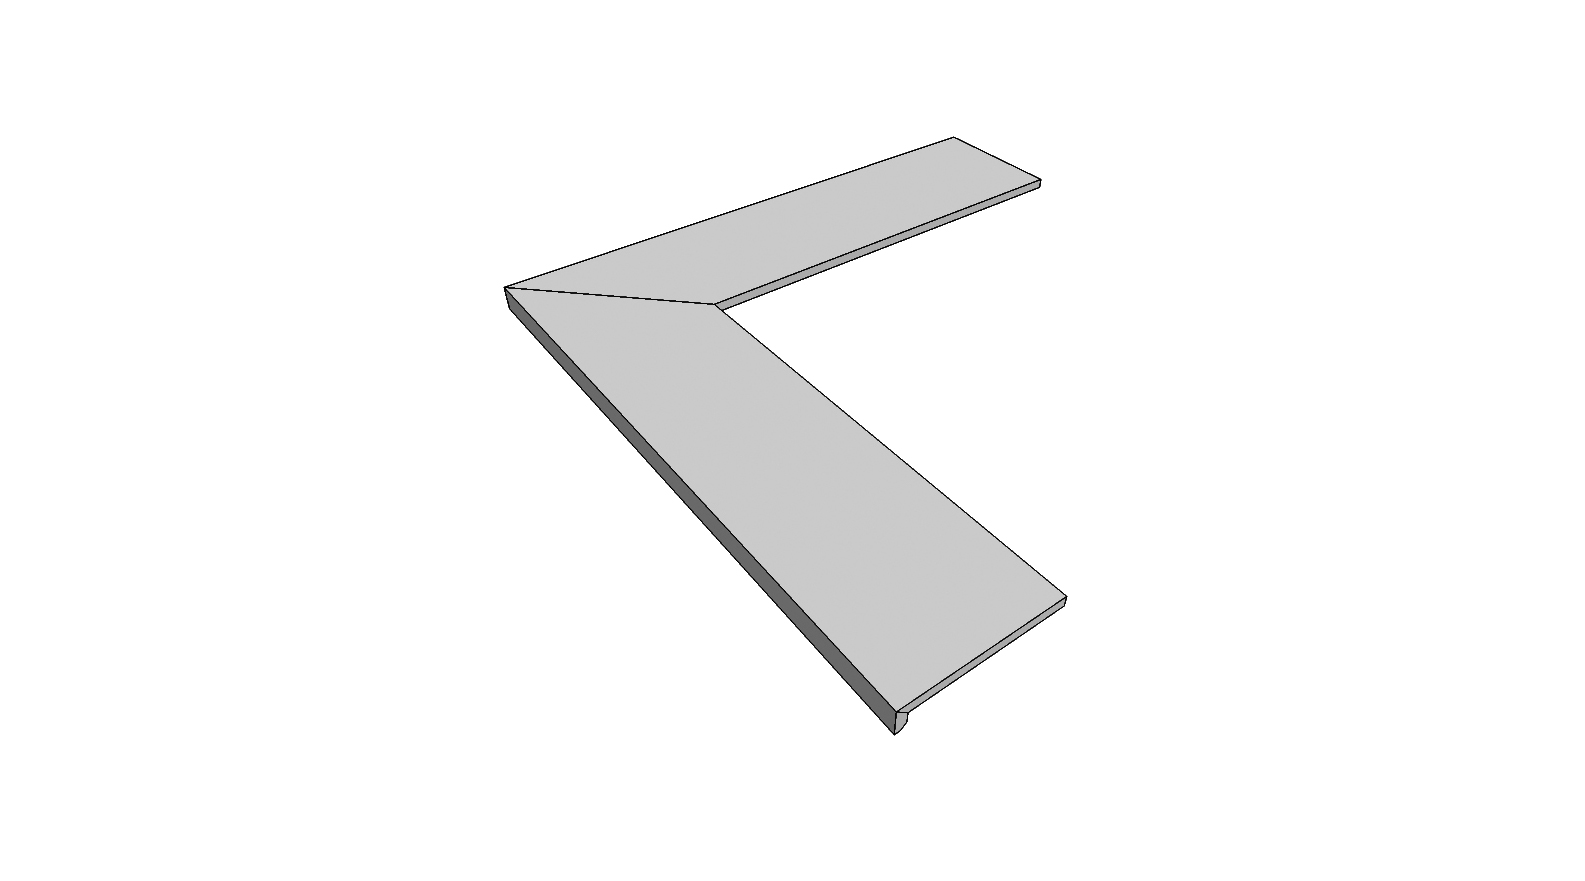 L-board stuck full external angle (2 pcs) <span style="white-space:nowrap;">12"x24"x2"</span>   <span style="white-space:nowrap;">thk. 20mm</span>